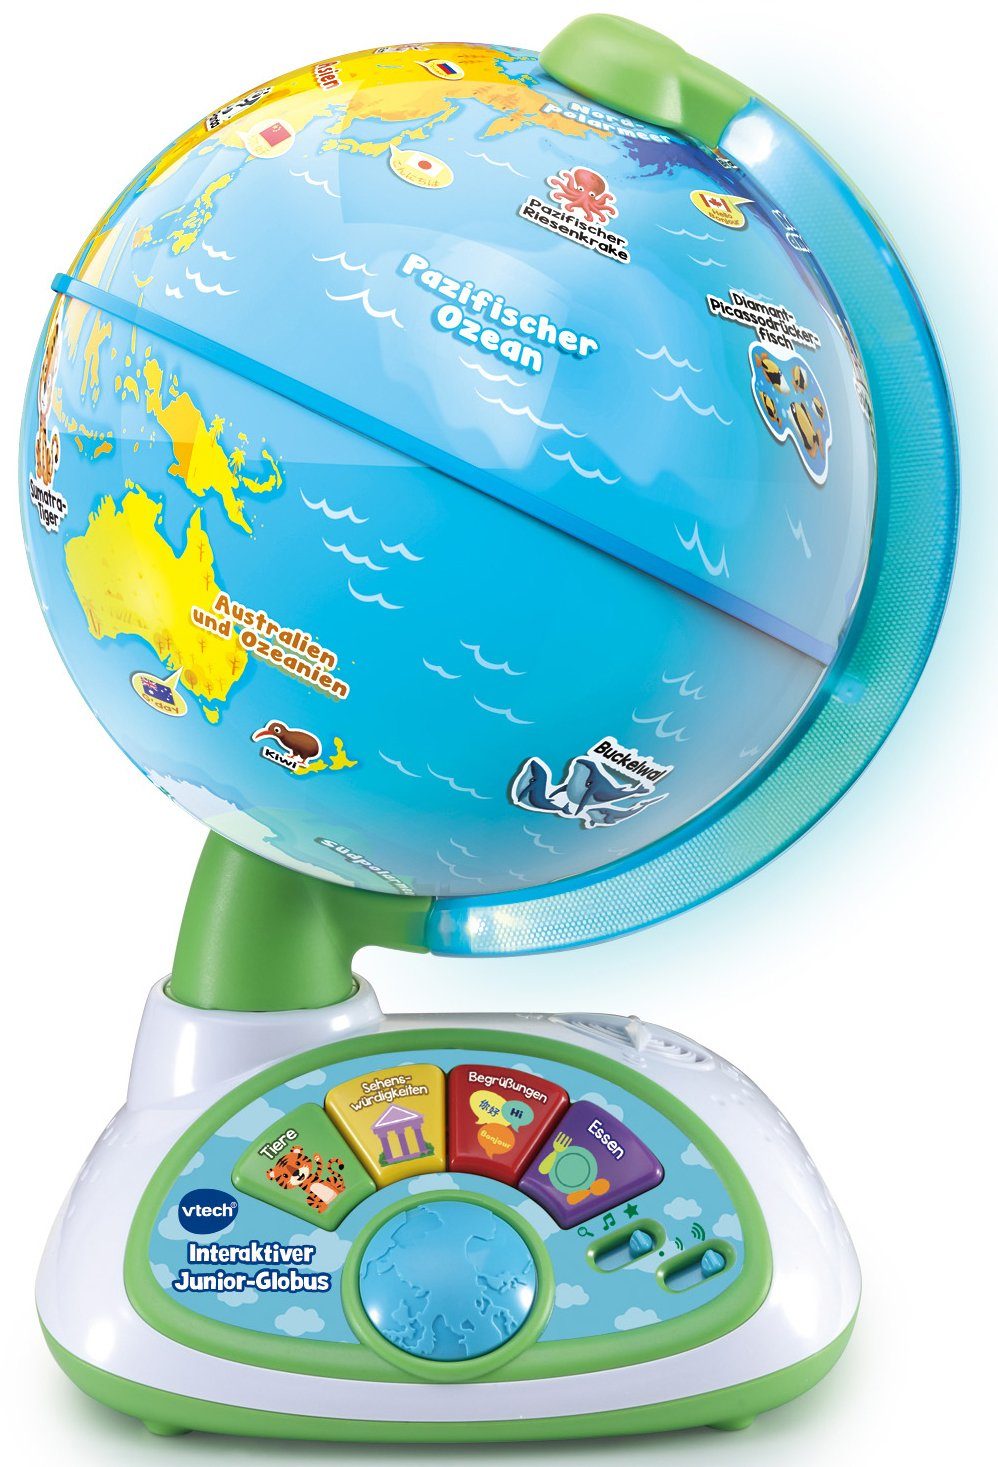 Spielzeug Globus VTech My Interactive Video Globe